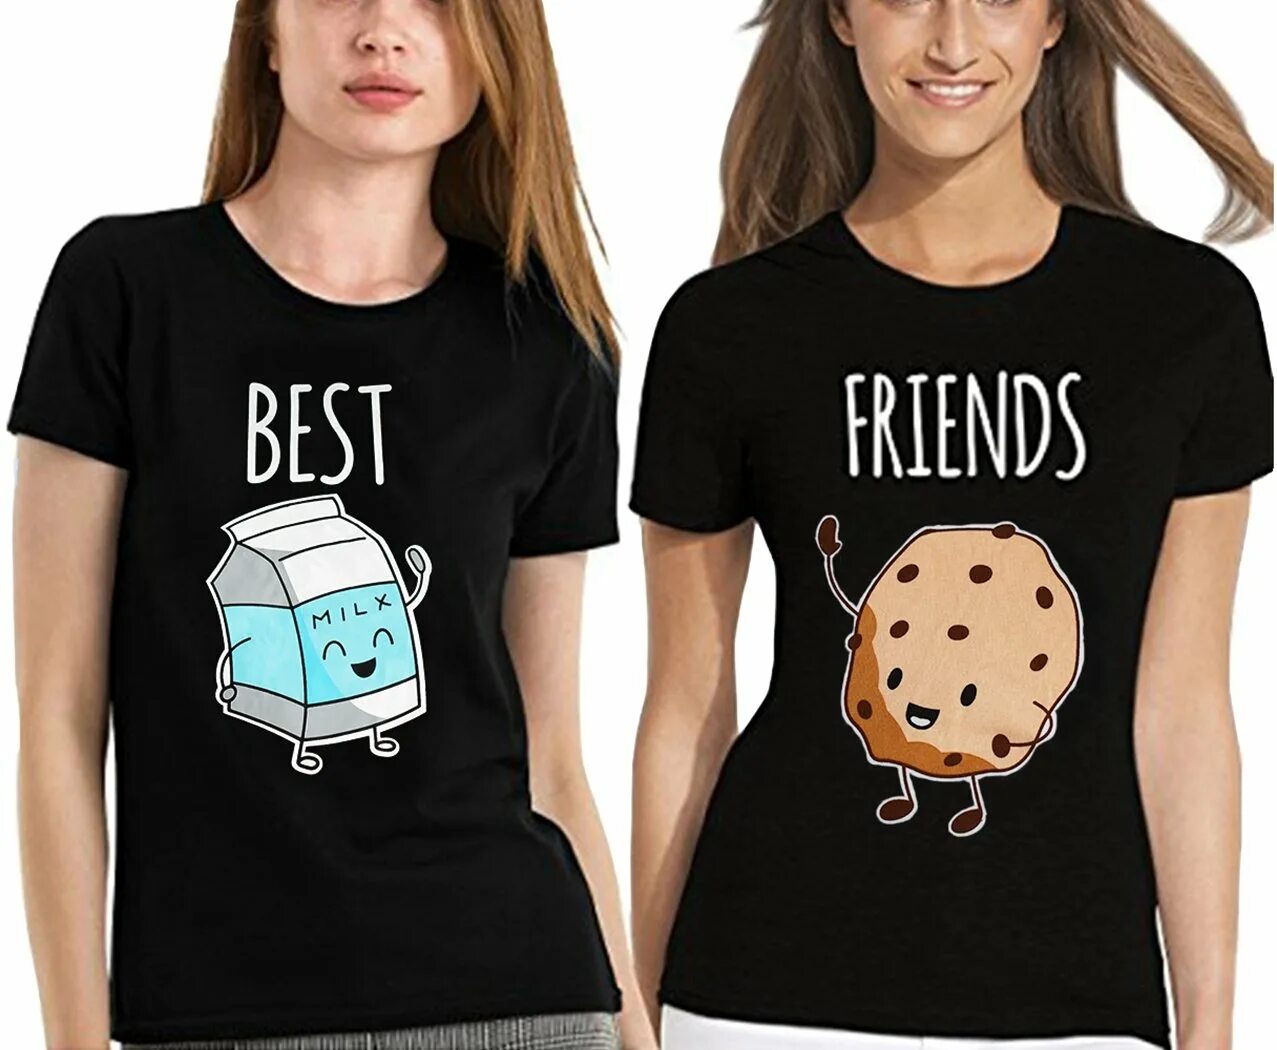 Best friends tv. Бест френдс. Бест френд футболка. Парные футболки BFF. Принт на футболку две девушки.